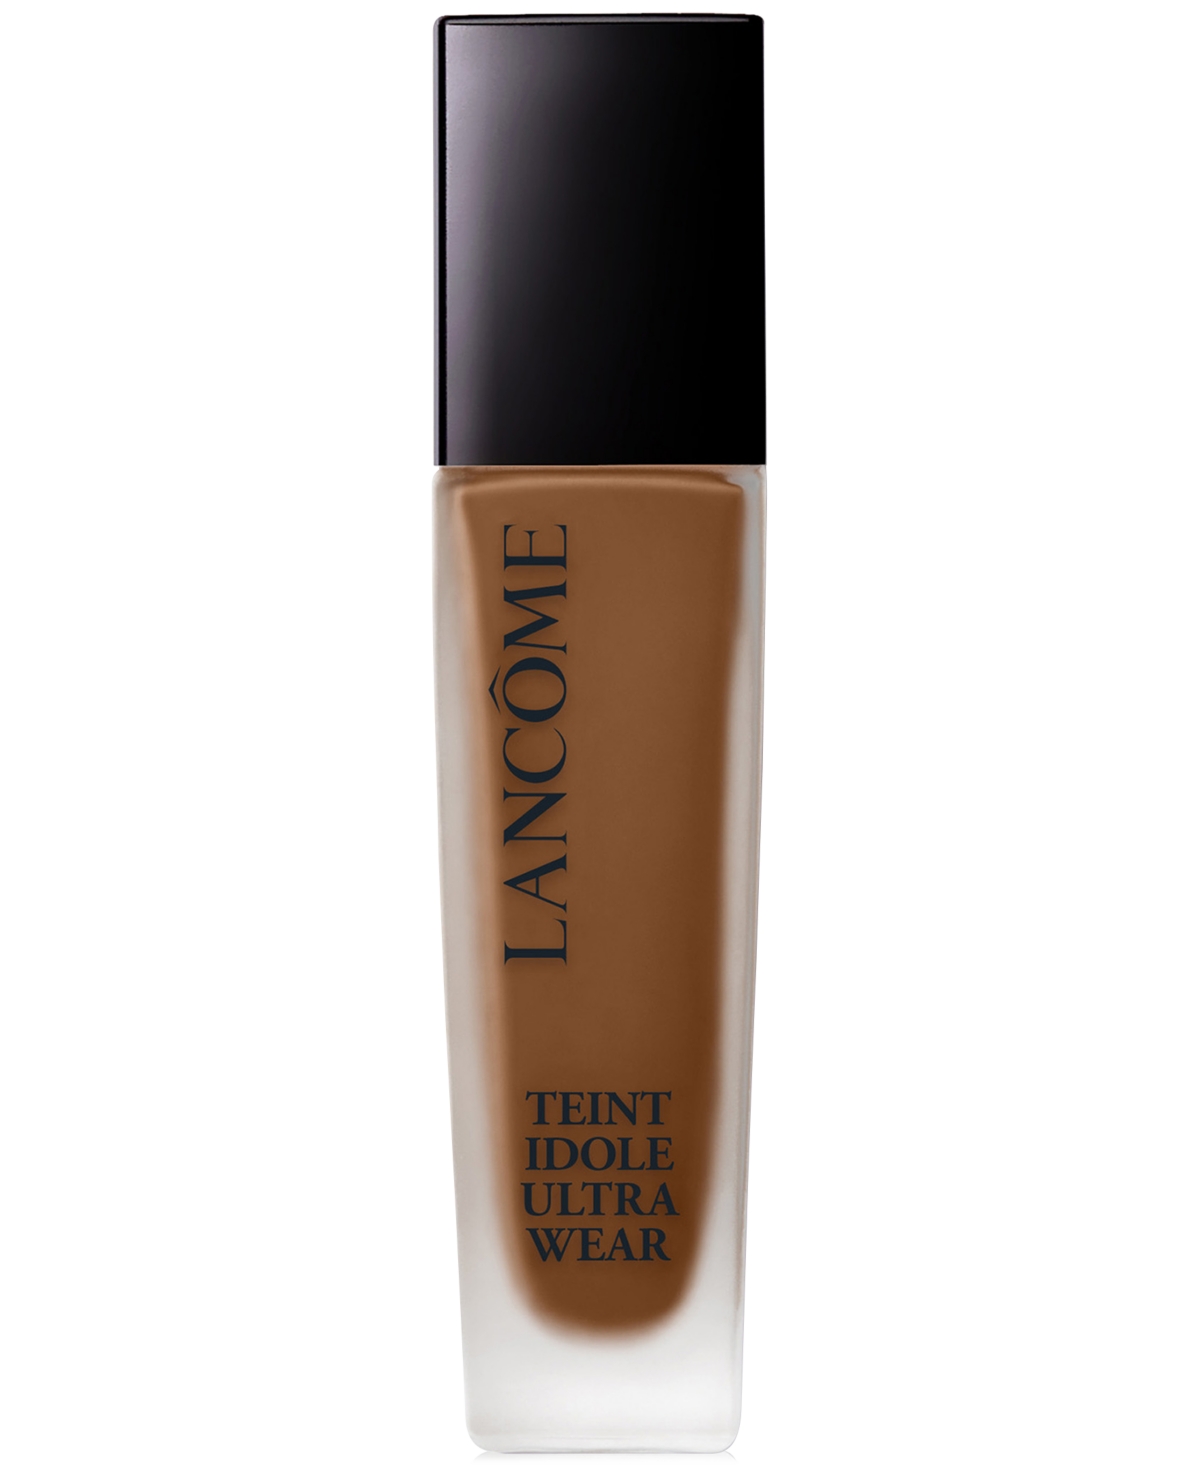 Lancôme Teint Idole Ultra Wear Foundation In W - Deep Skin With Warm,golden Undertone